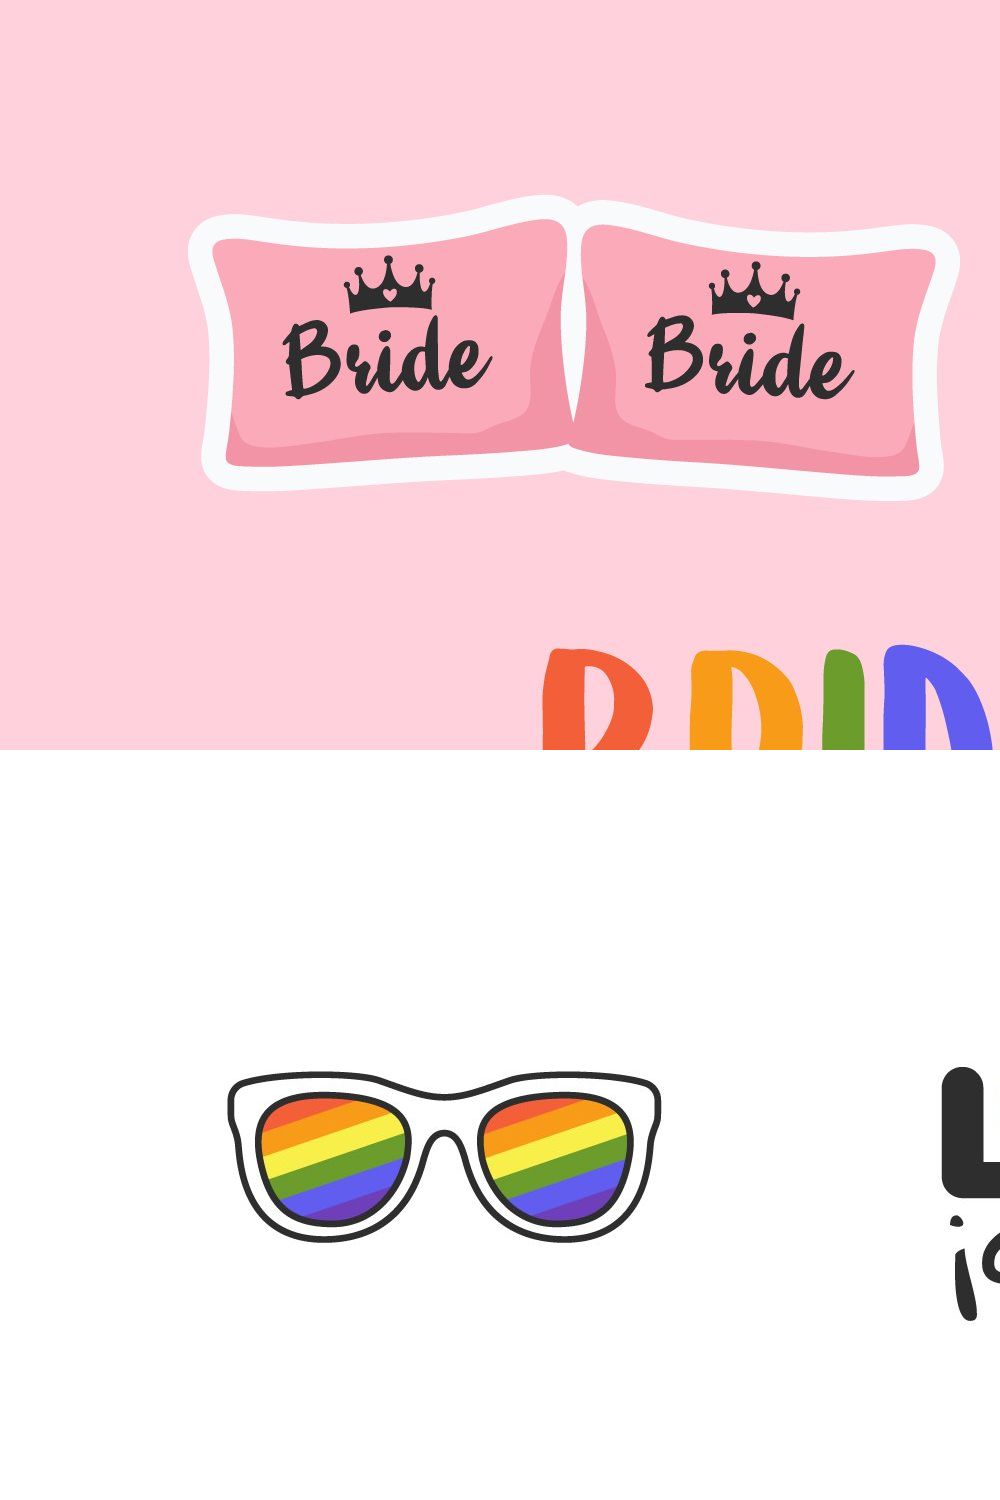 Bride Pride LGBT wedding vectors pinterest preview image.